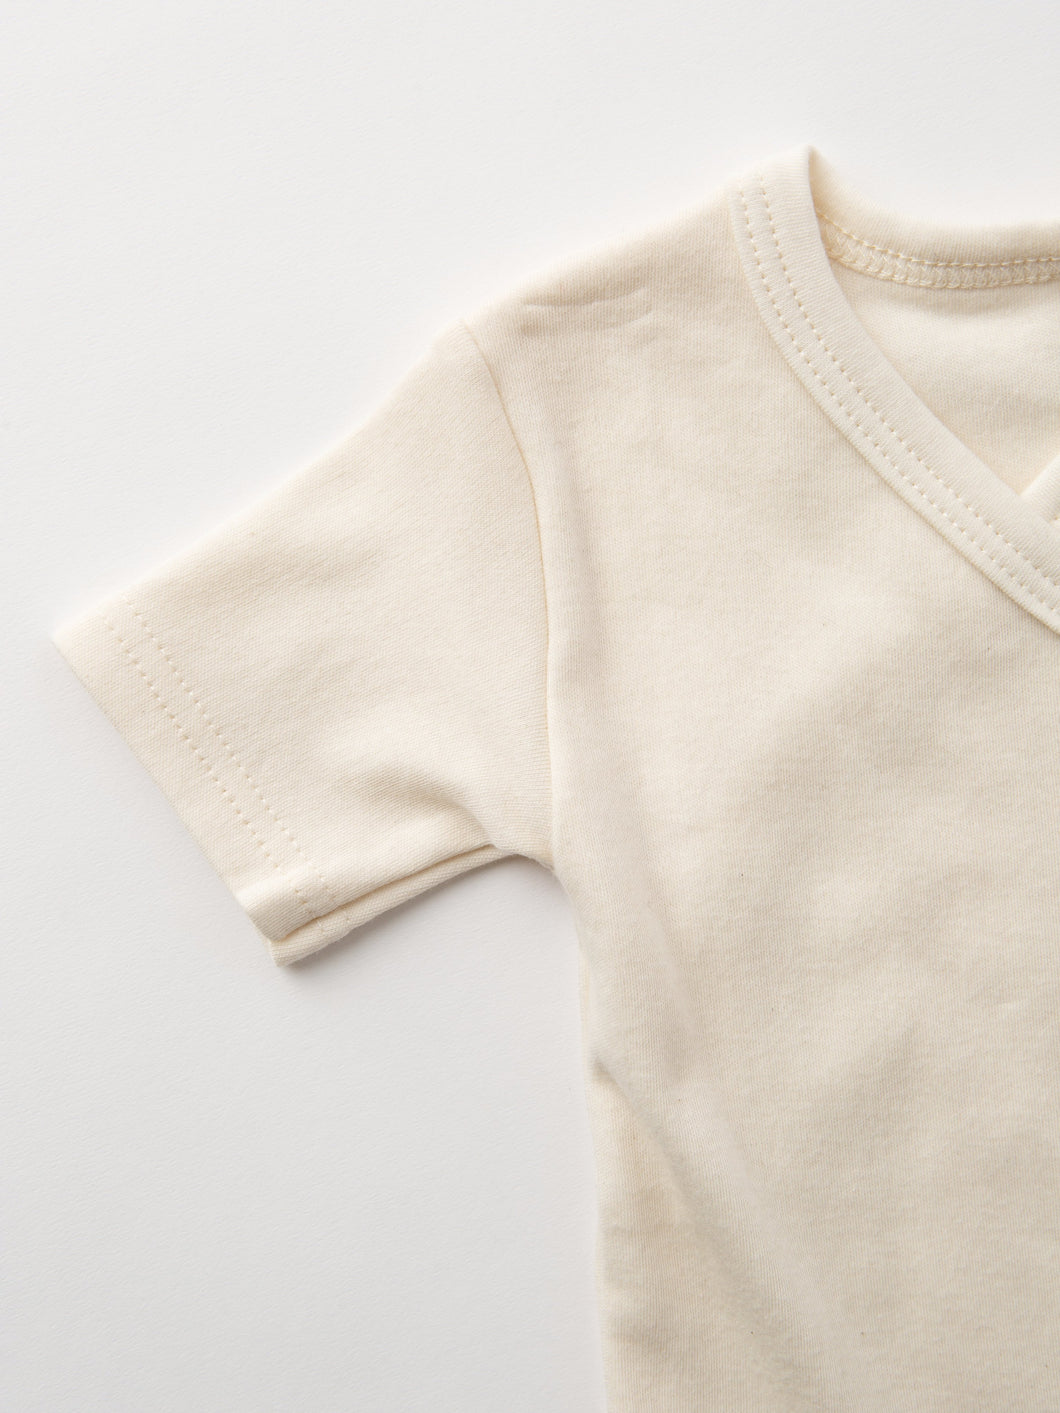 Organic Cotton Short Sleeve Baby Romper By Fog Linen